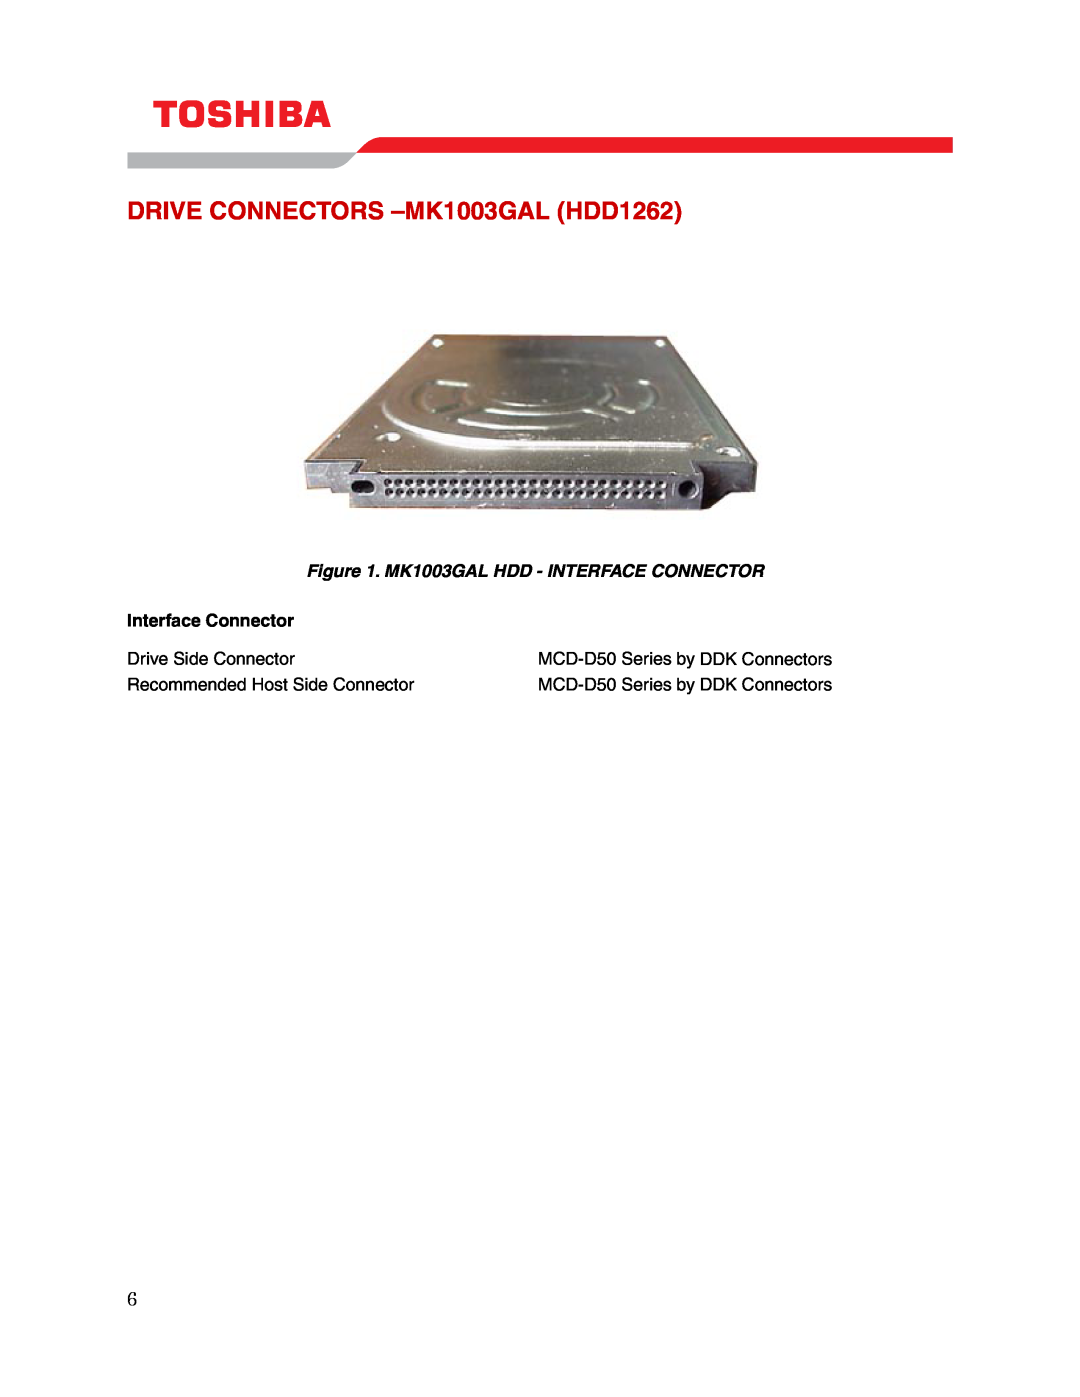 Toshiba user manual DRIVE CONNECTORS -MK1003GAL HDD1262, MK1003GAL HDD - INTERFACE CONNECTOR, Interface Connector 